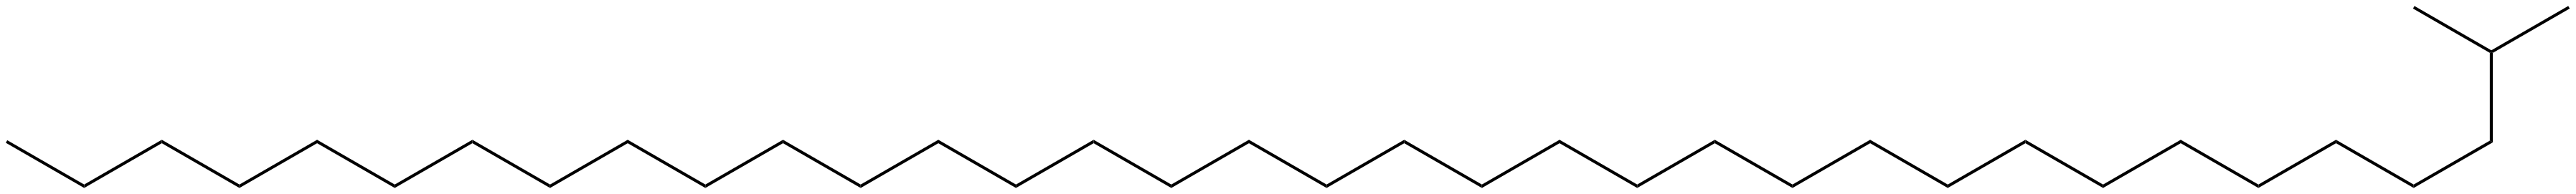 Image of 2-methylpentatriacontane